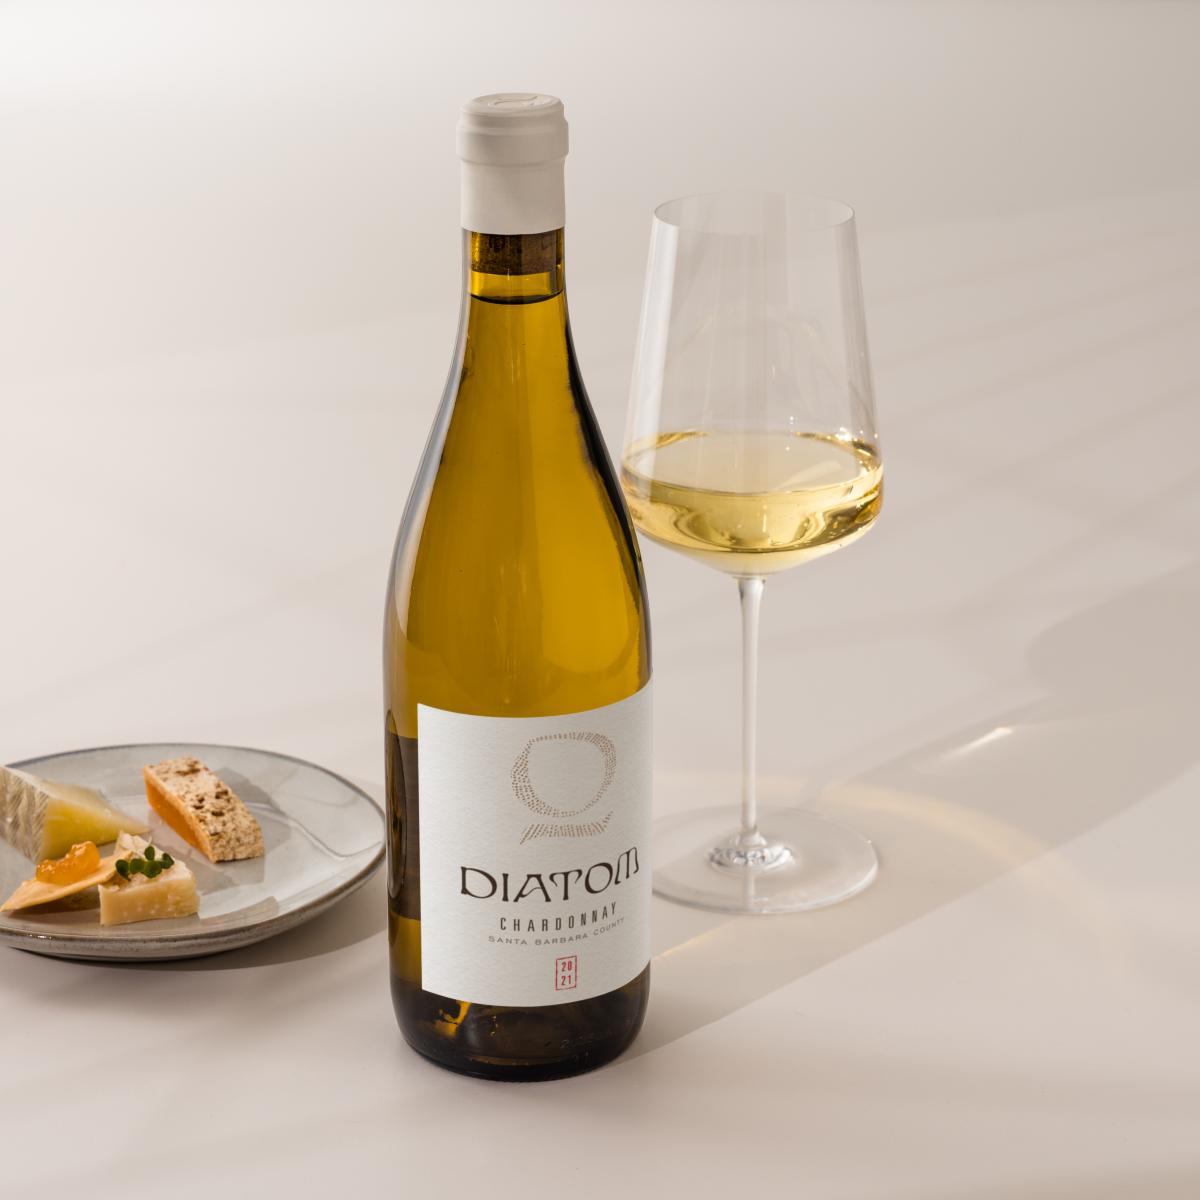 Diatom Chardonnay with wine glass and cheese 